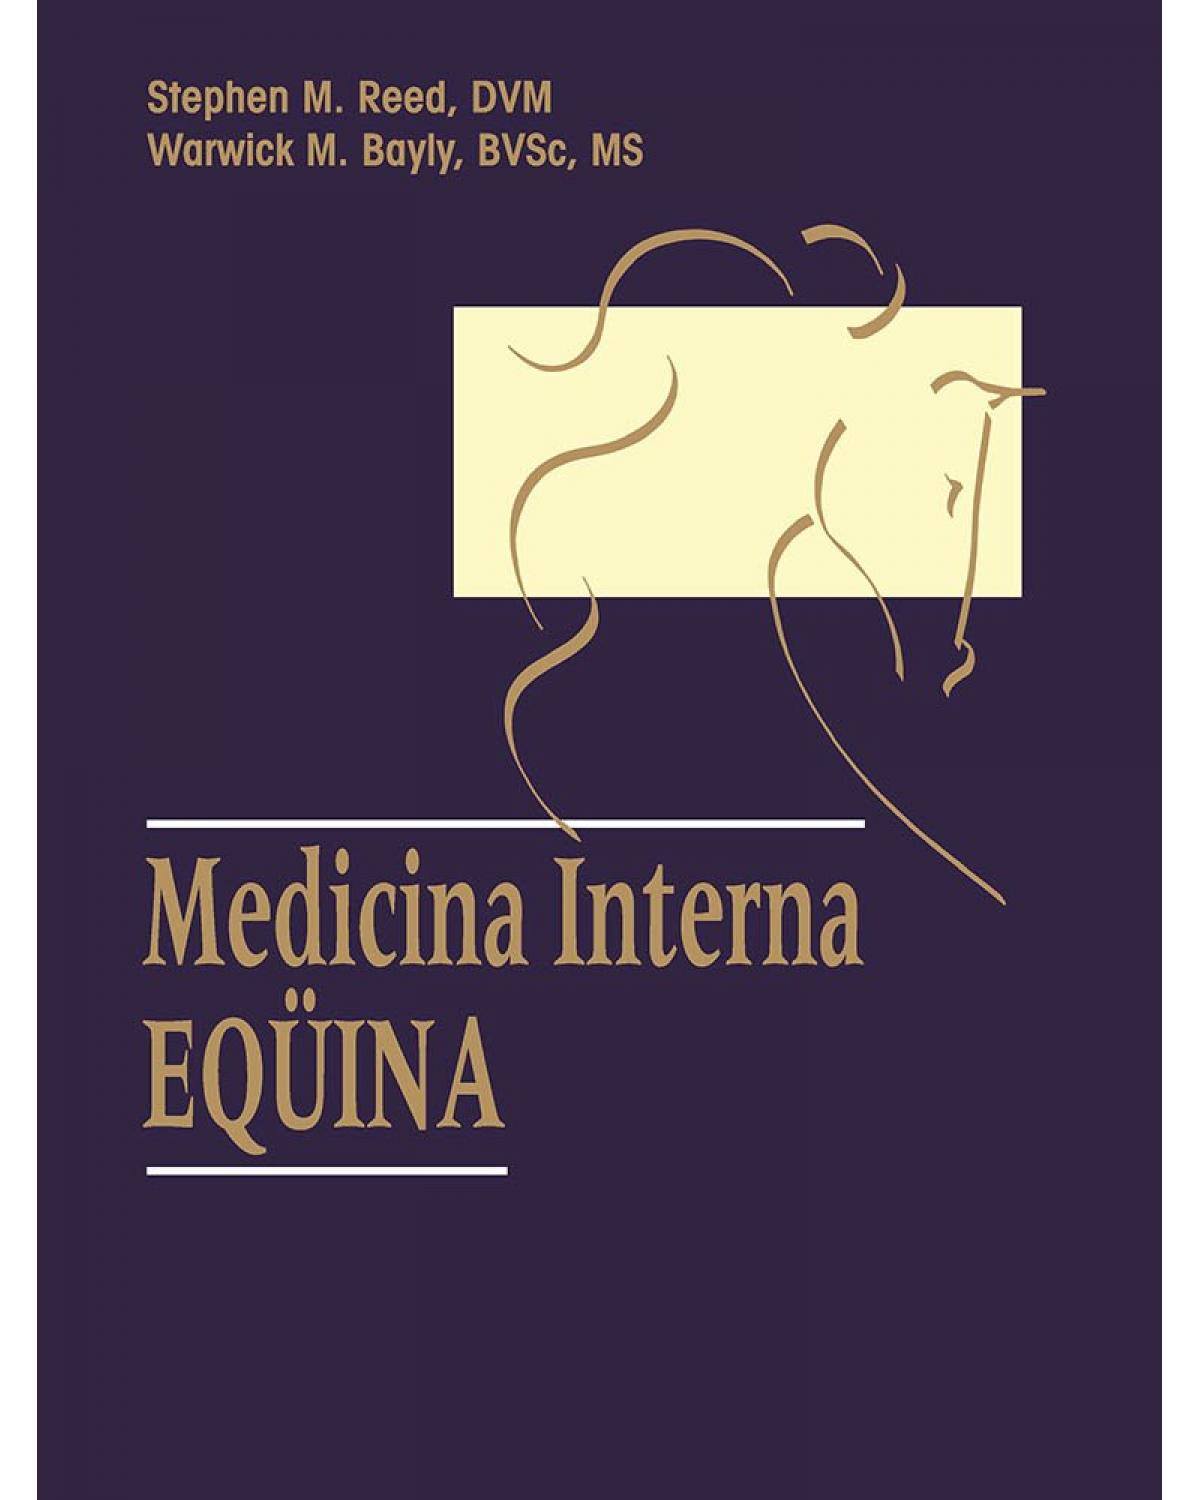 Medicina interna eqüina - 1ª Edição | 2000